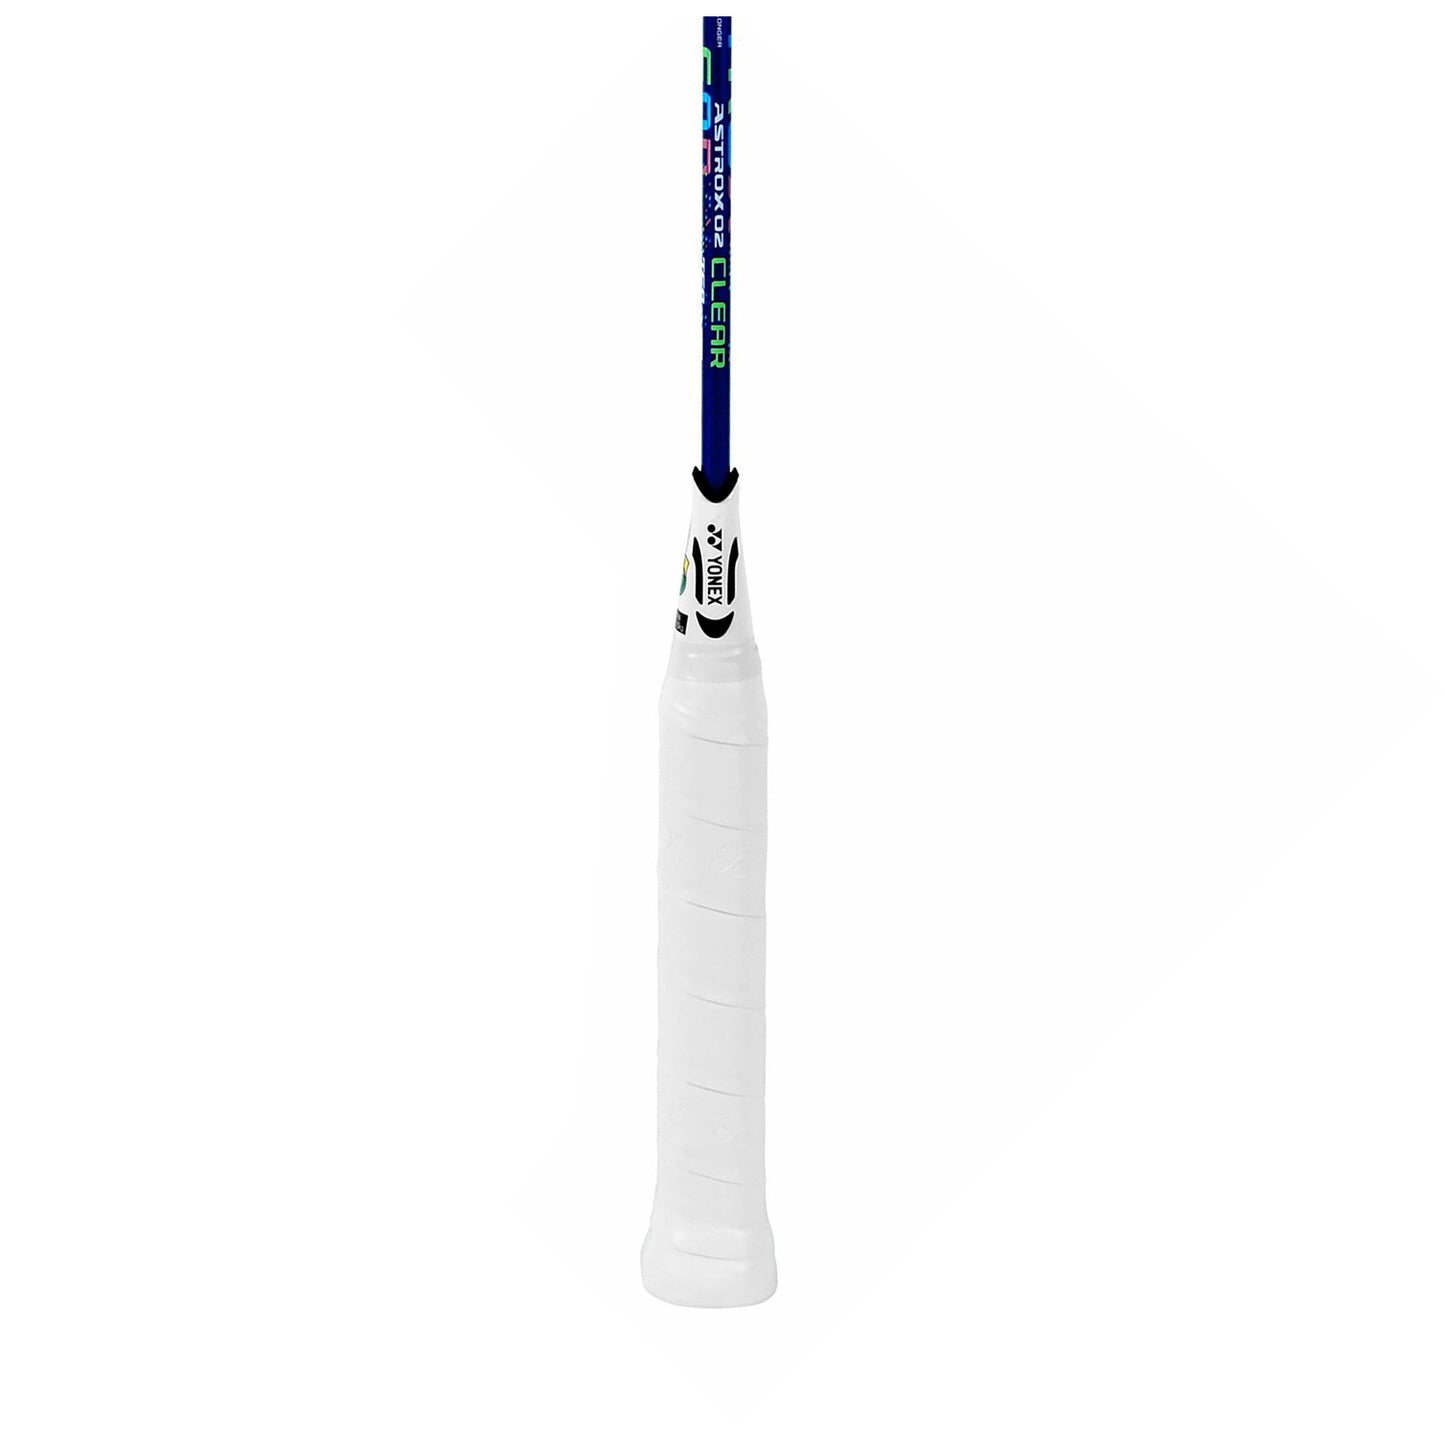 Yonex Astrox 02 Clear Strung Badminton Racquet, Royal Blue - Best Price online Prokicksports.com